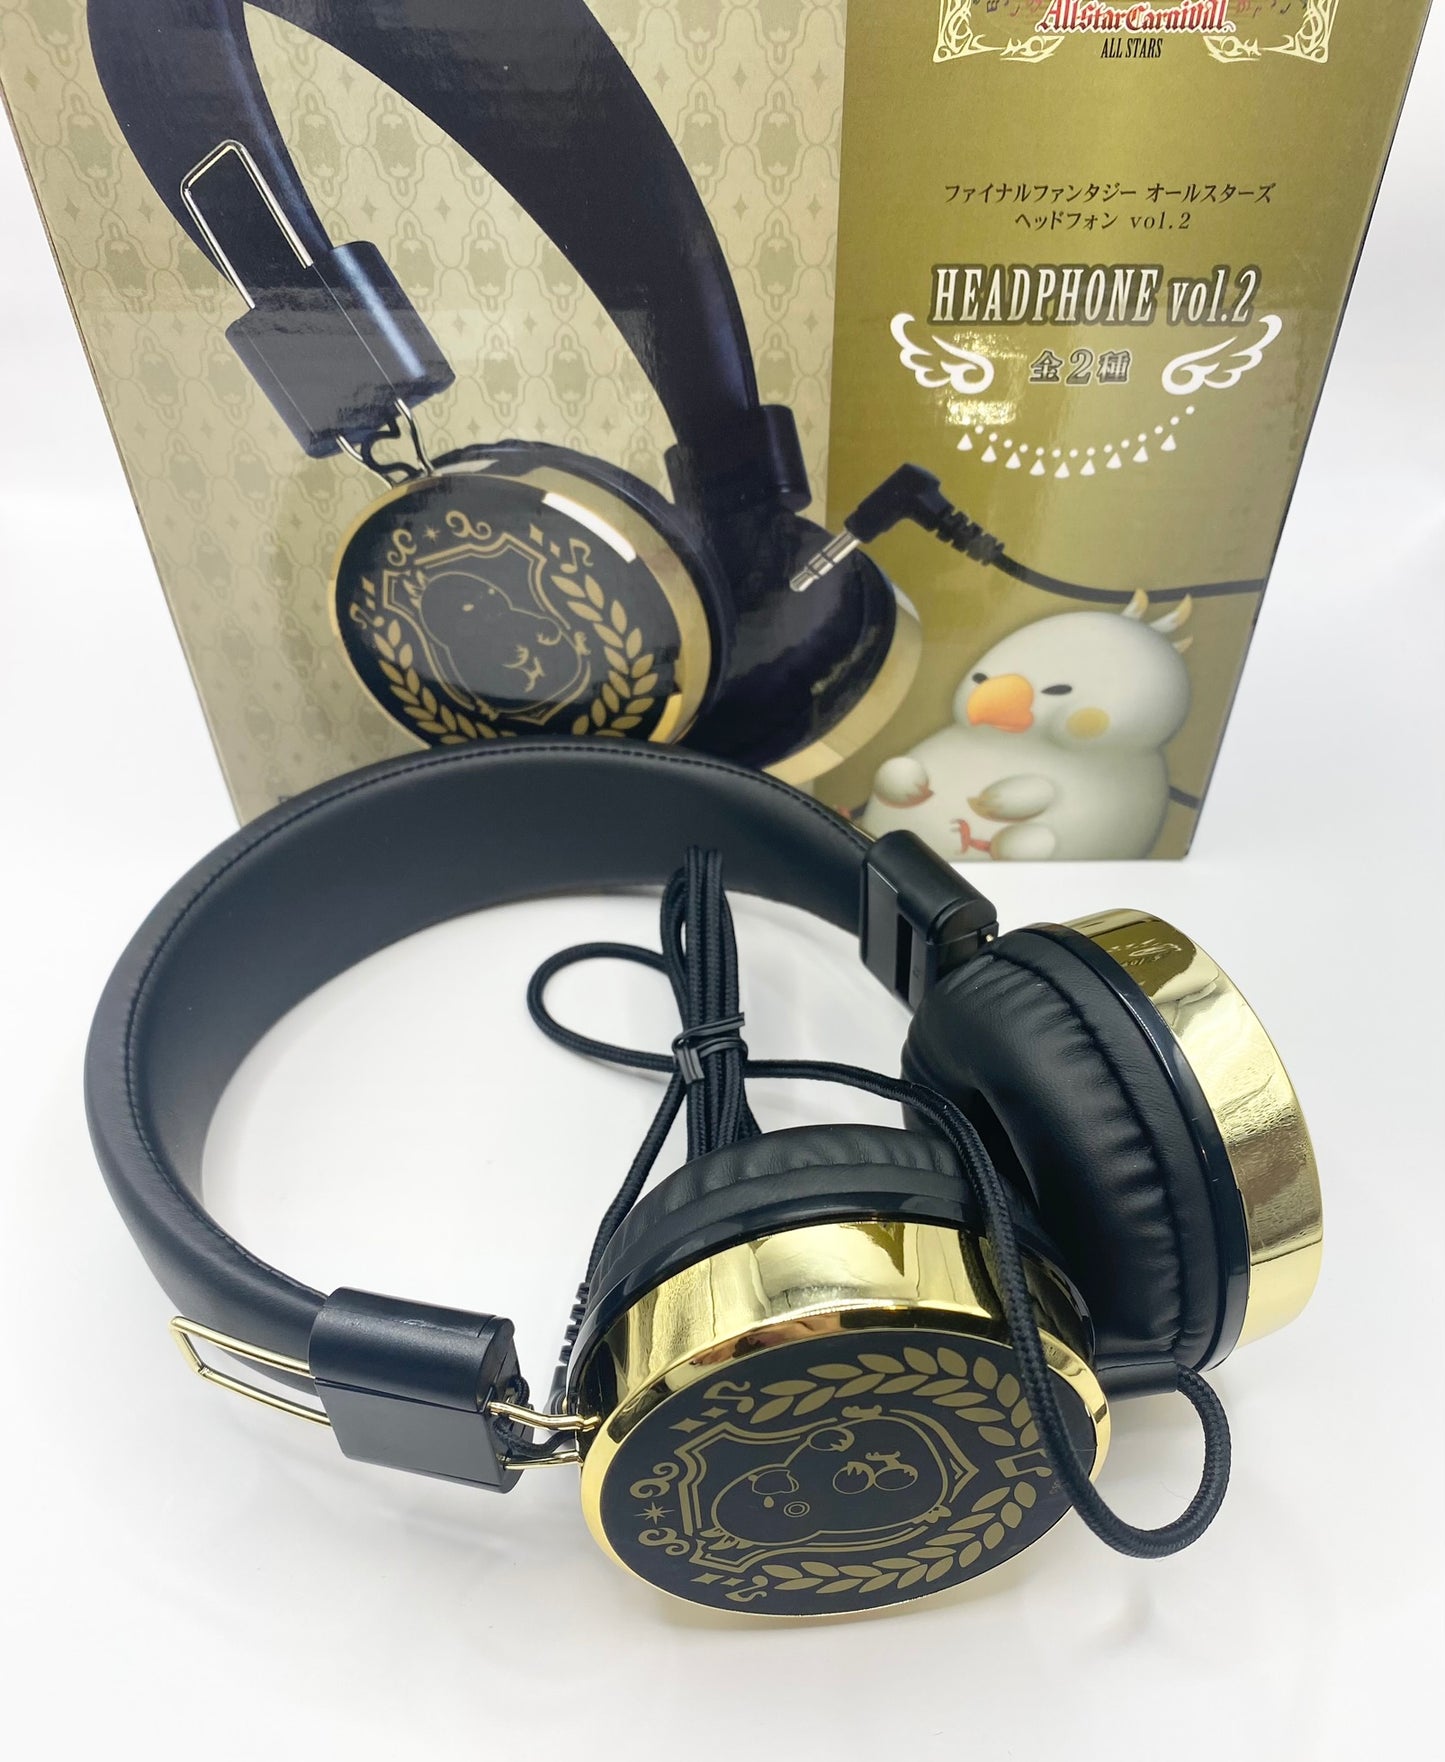 Final Fantasy Dissidia Theatrhythm All Star Carnival Headphones Vol 2